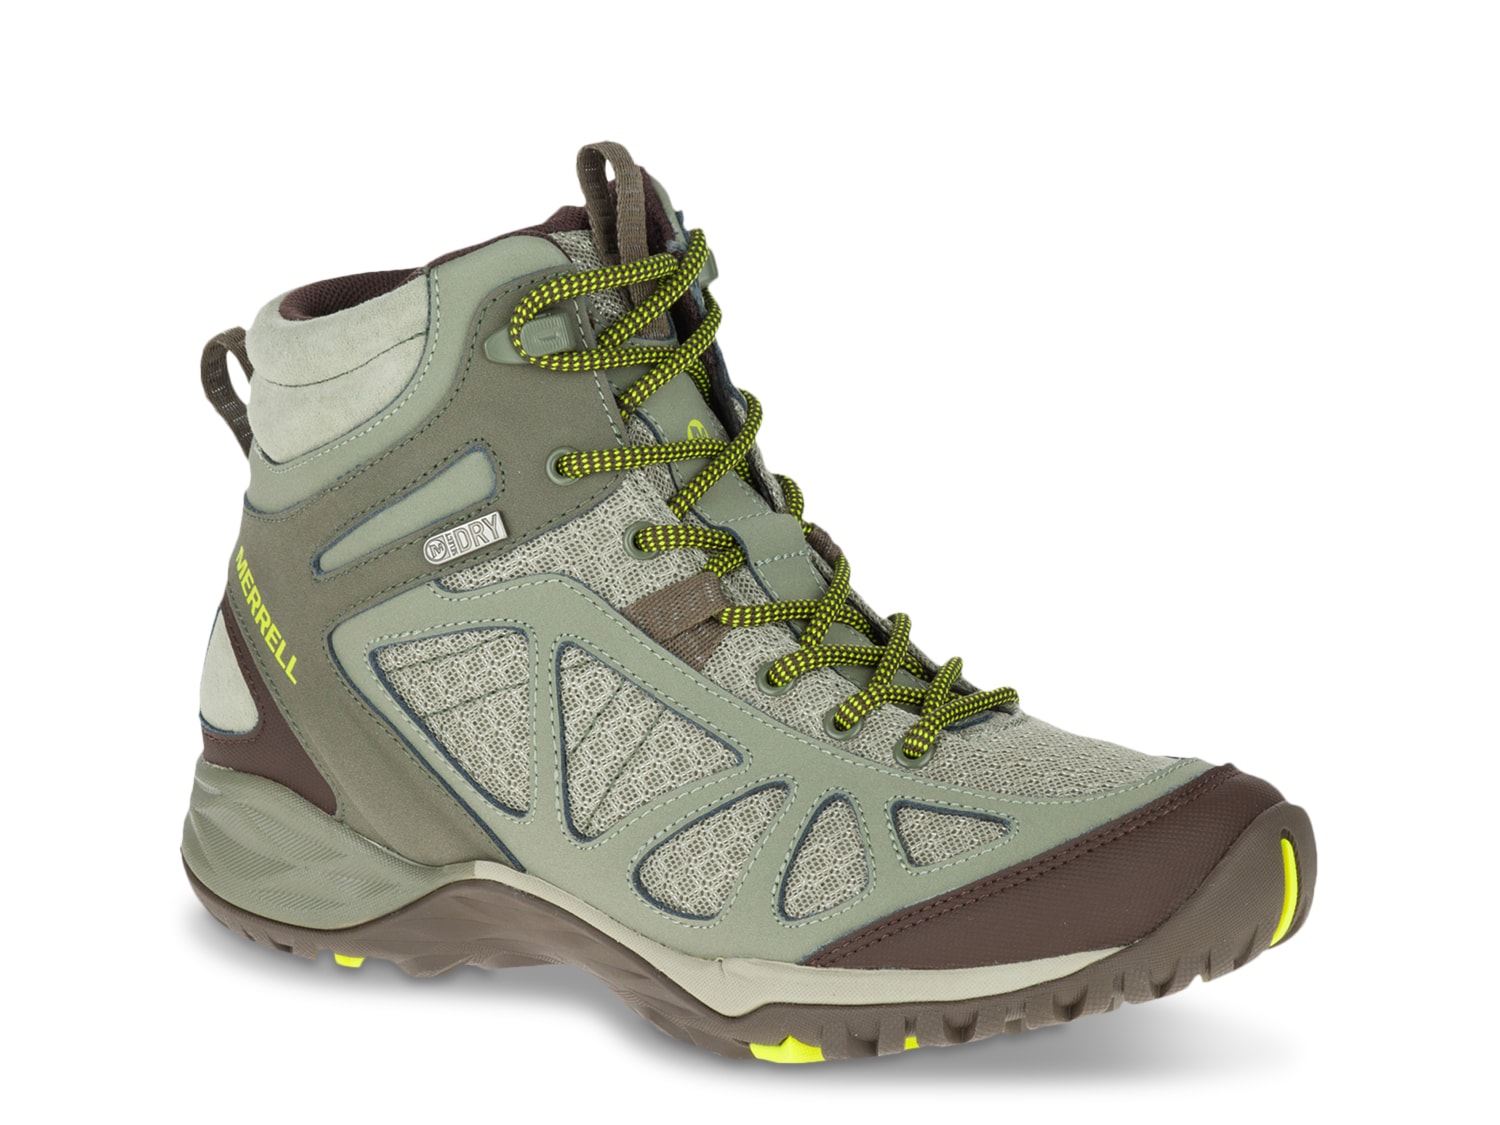 Merrell Siren Sport Hiking Boot - Women's - Free Shipping | DSW